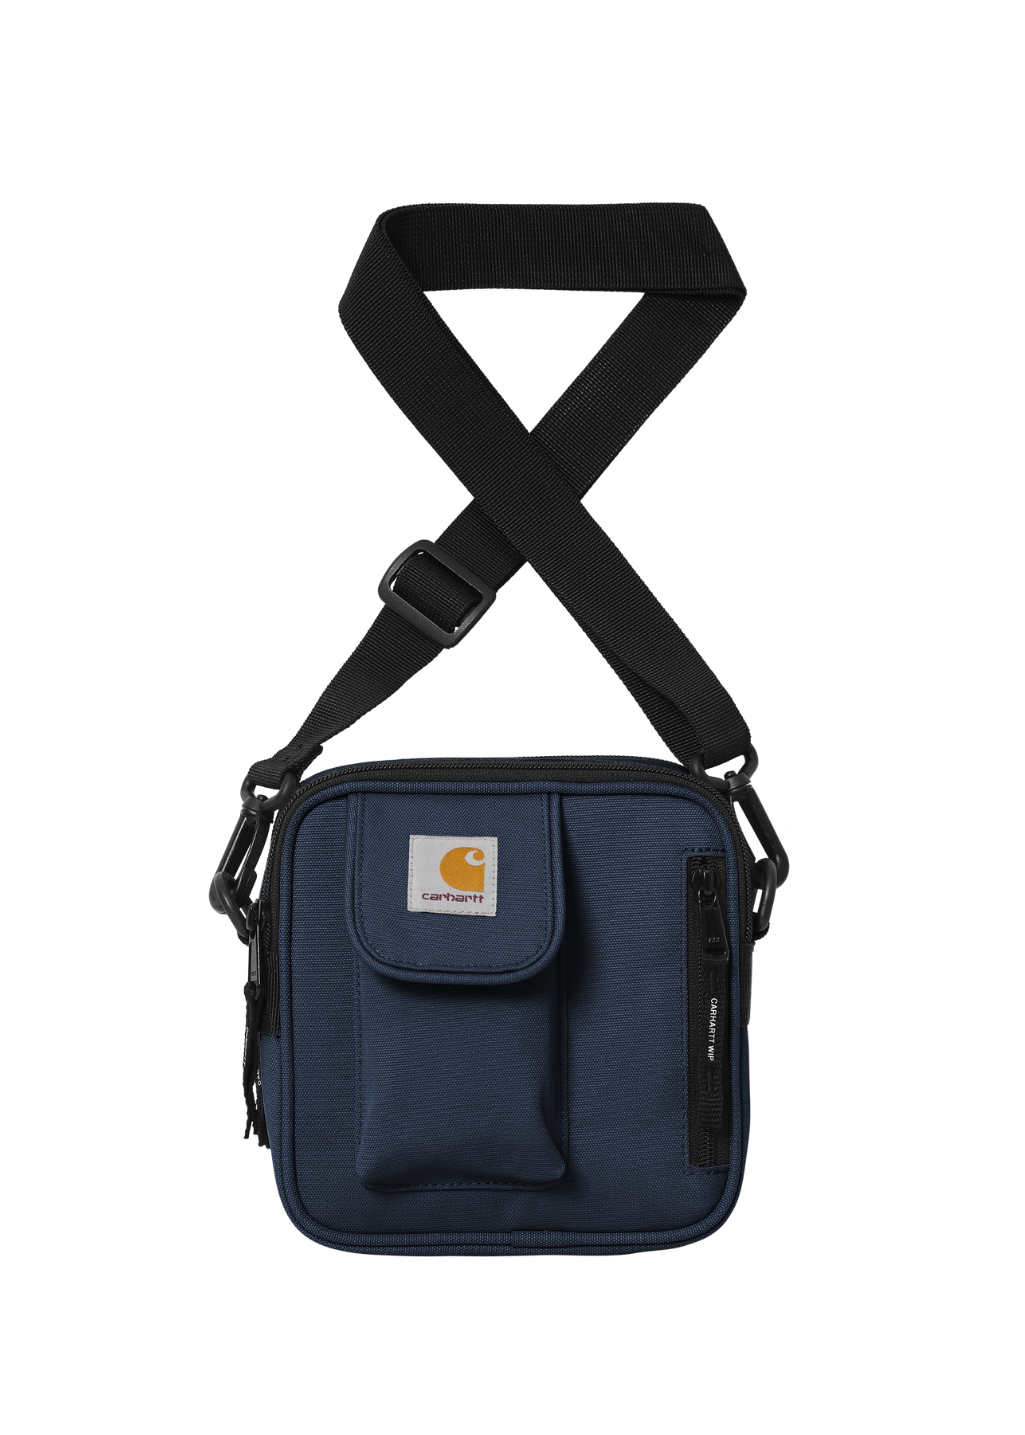 Carhartt WIP Essentials Bag ONE SIZE / Blue / Blue